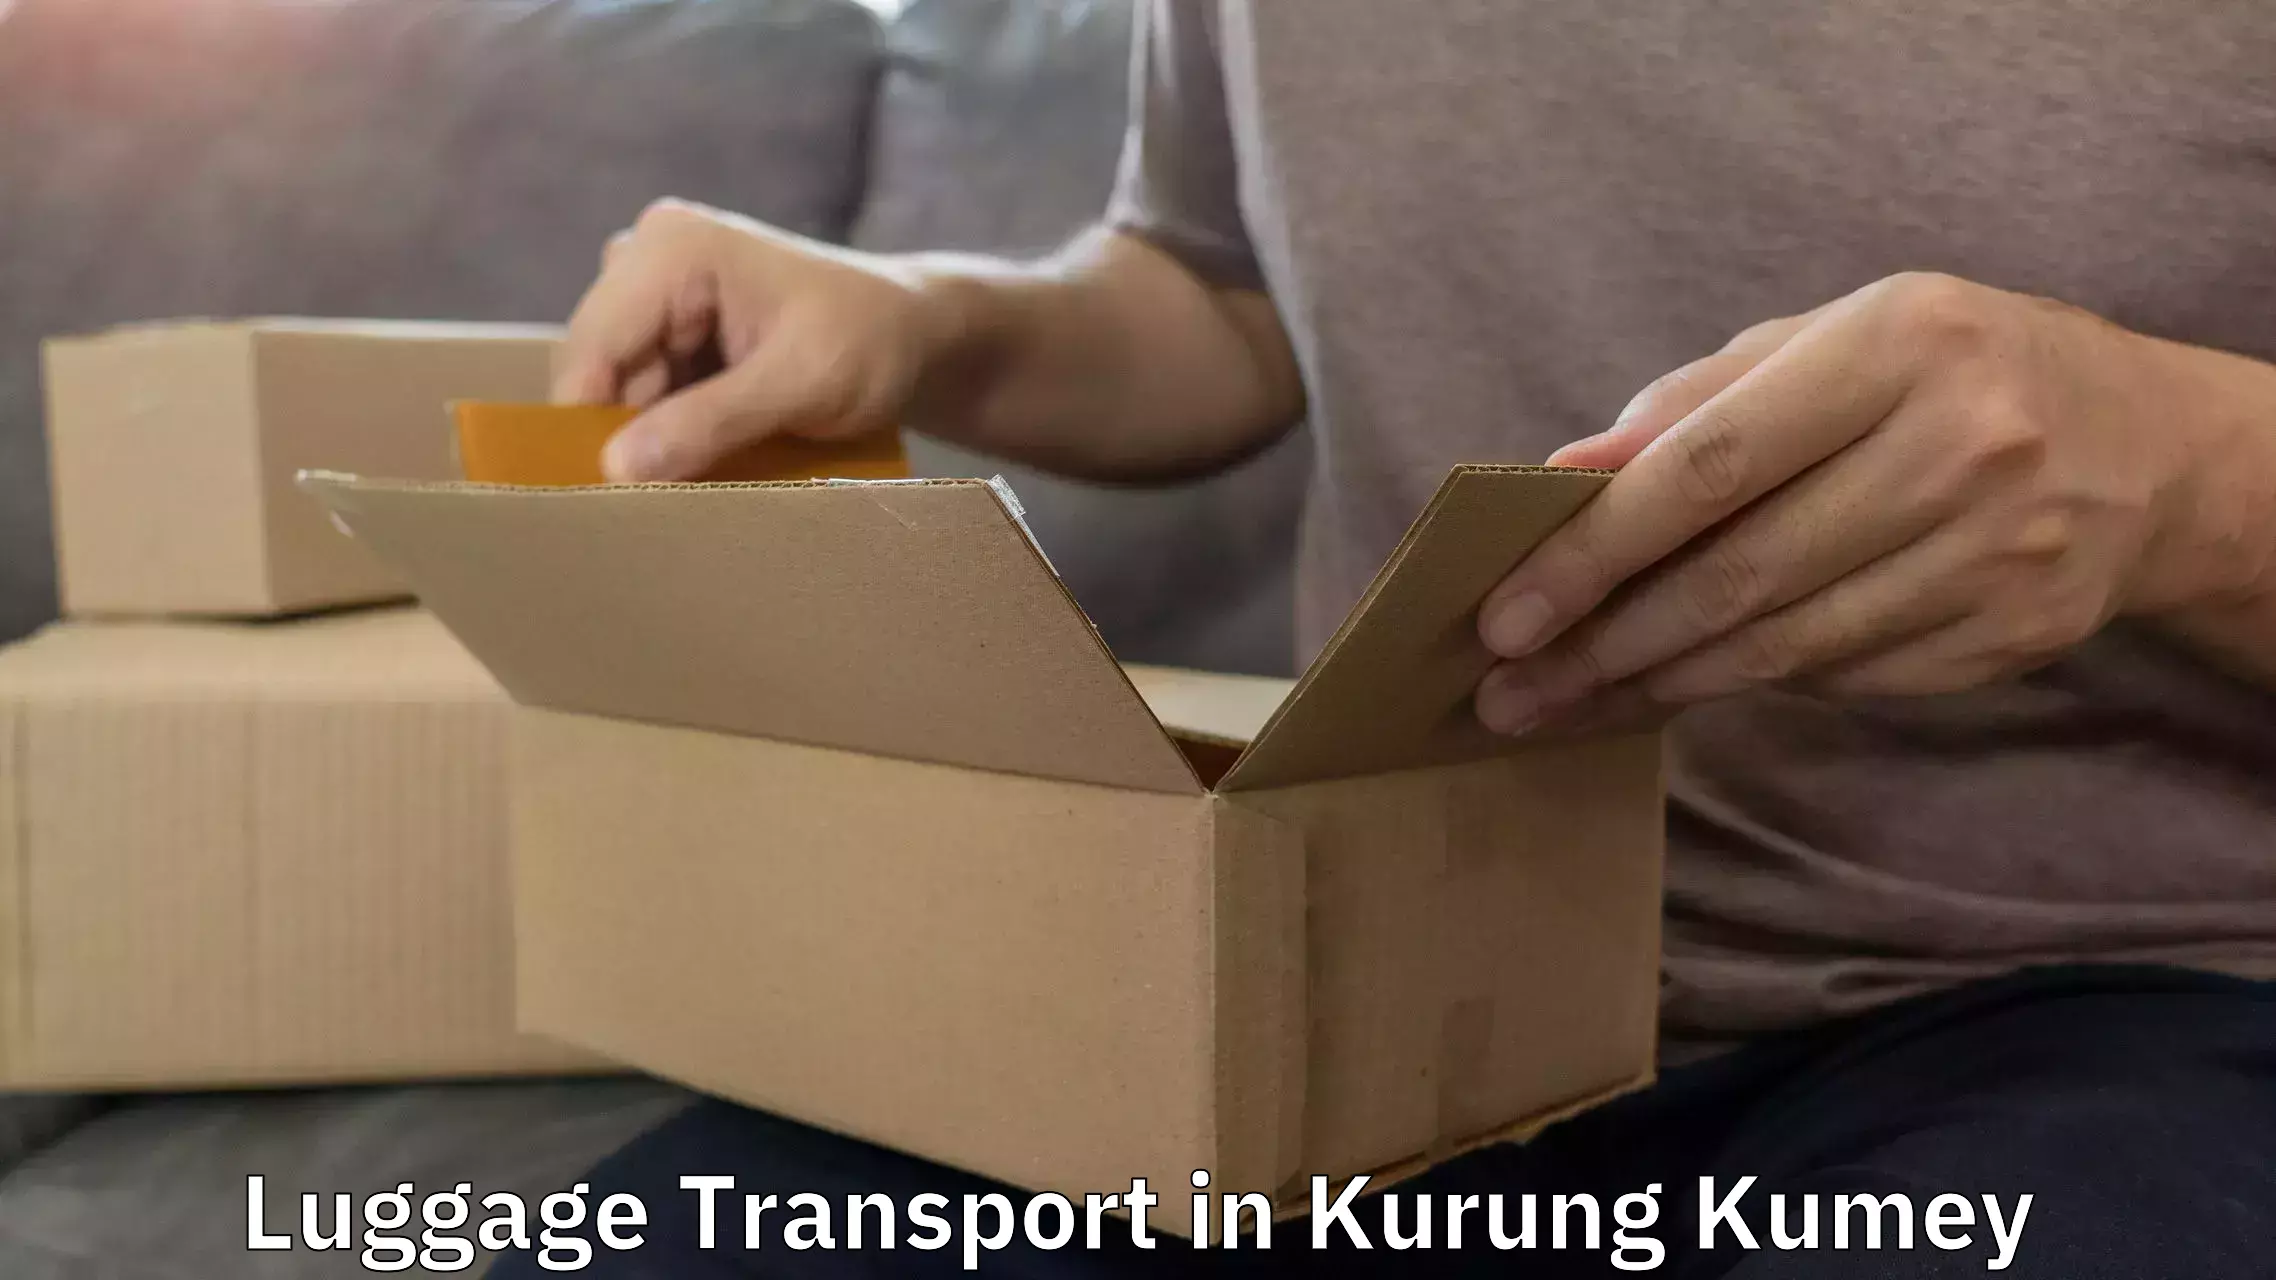 Luggage dispatch service in Kurung Kumey